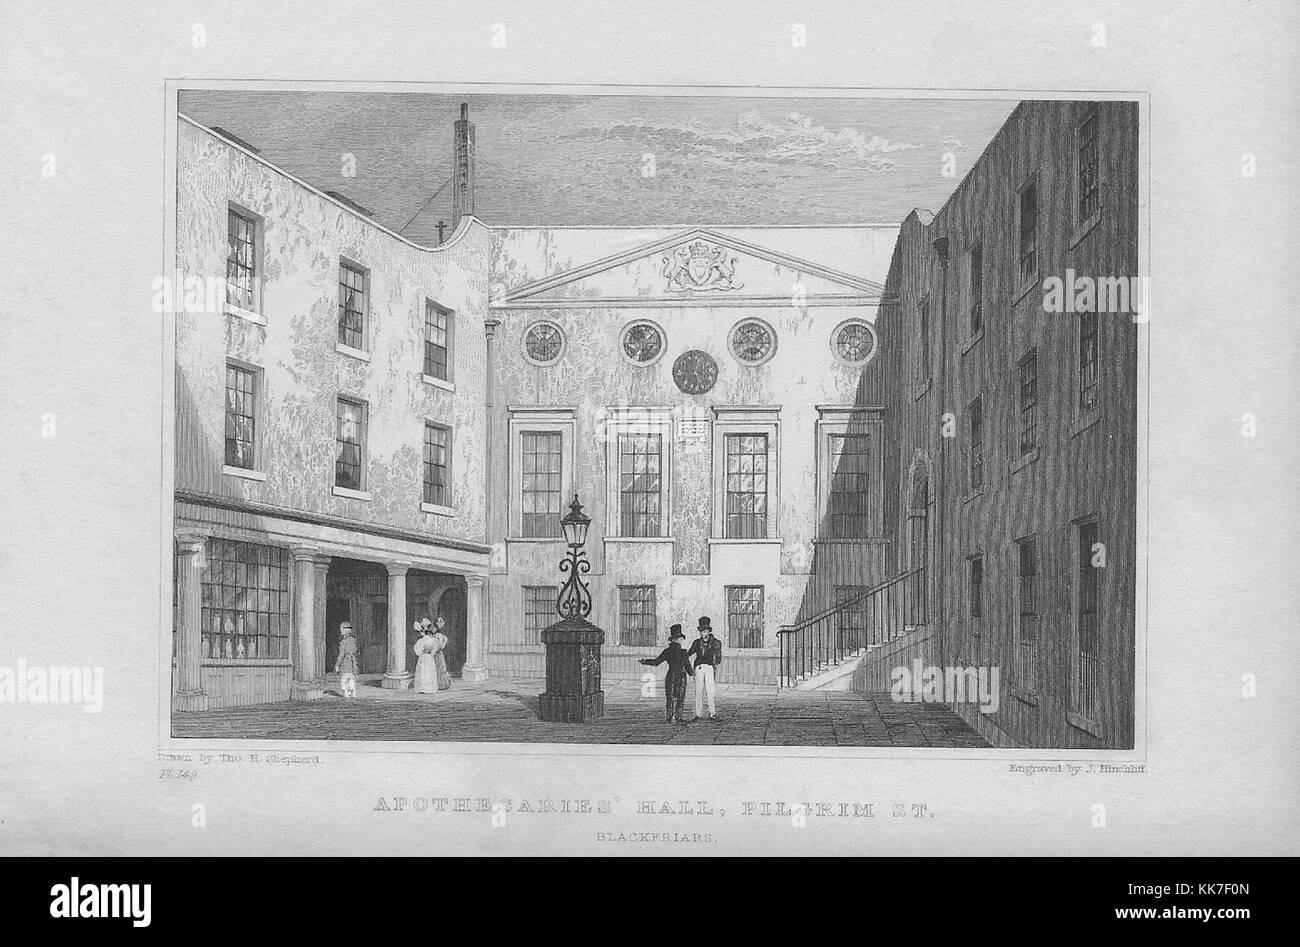 Apothecaries Hall, Pilgrim Street, engraving from 'Metropolitan Improvements, or London in the Nineteenth Century' England, UK 1828 Stock Photo